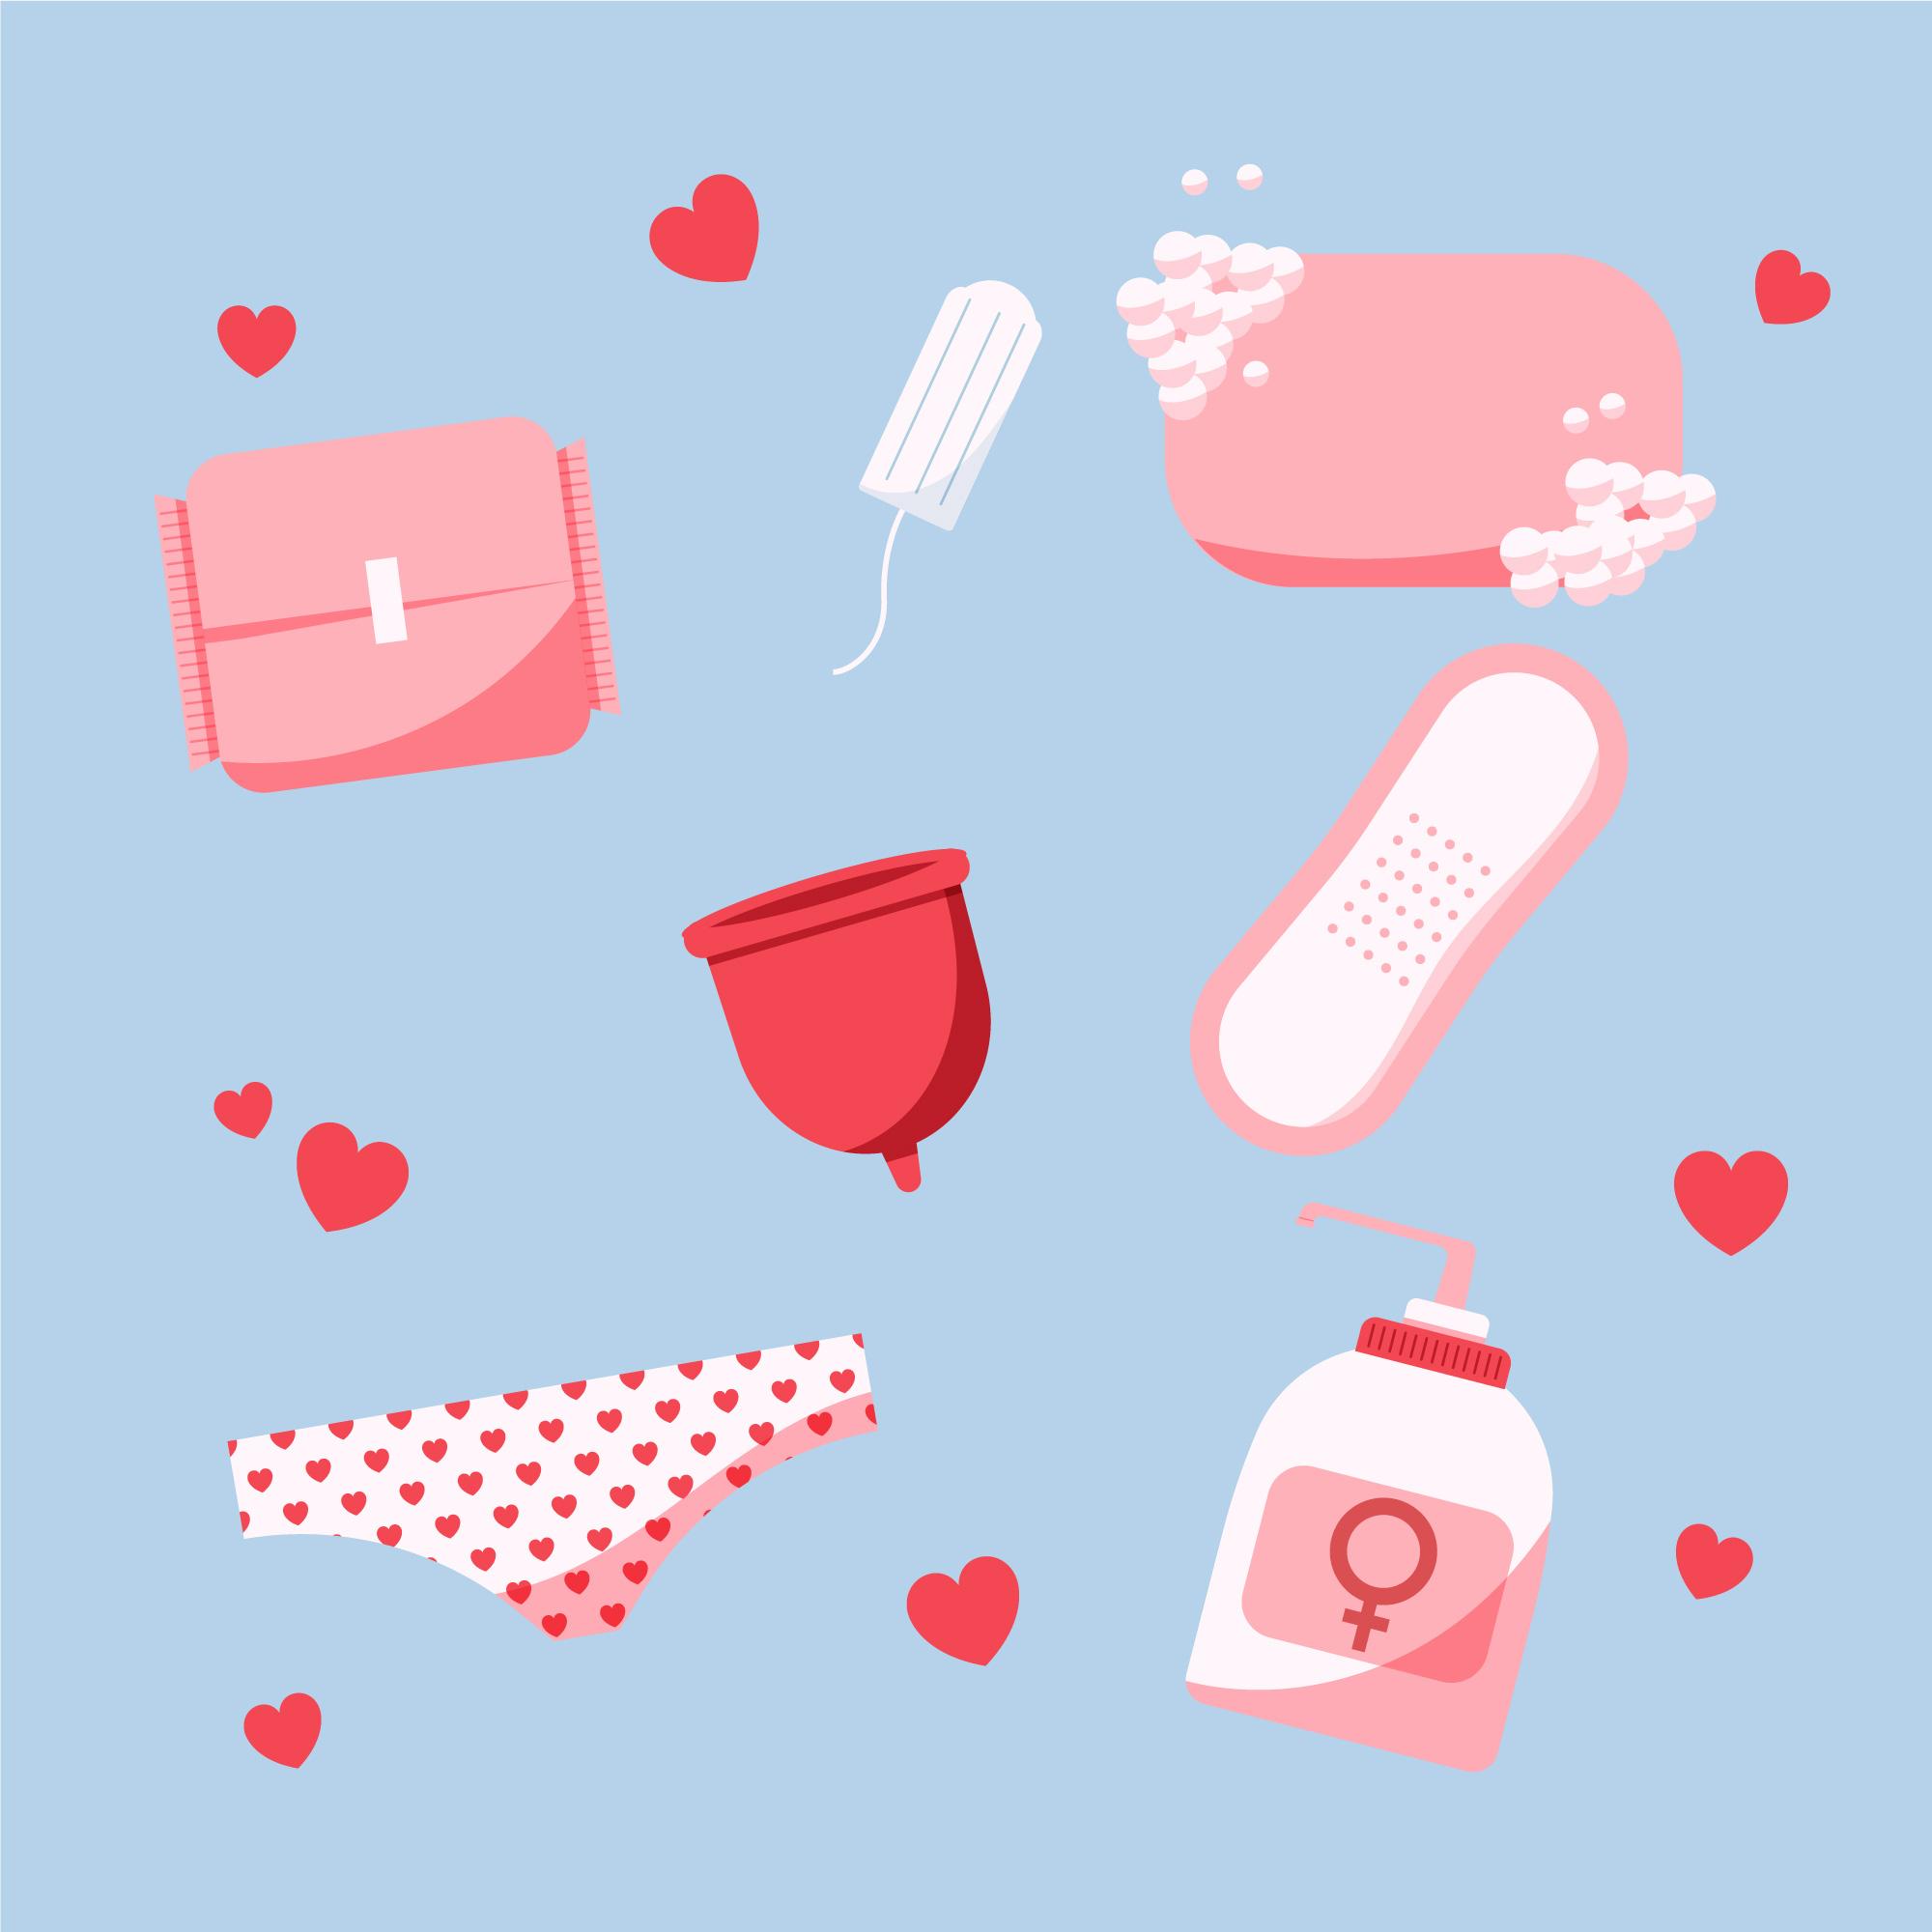 preparing for periods - feminine hygiene products